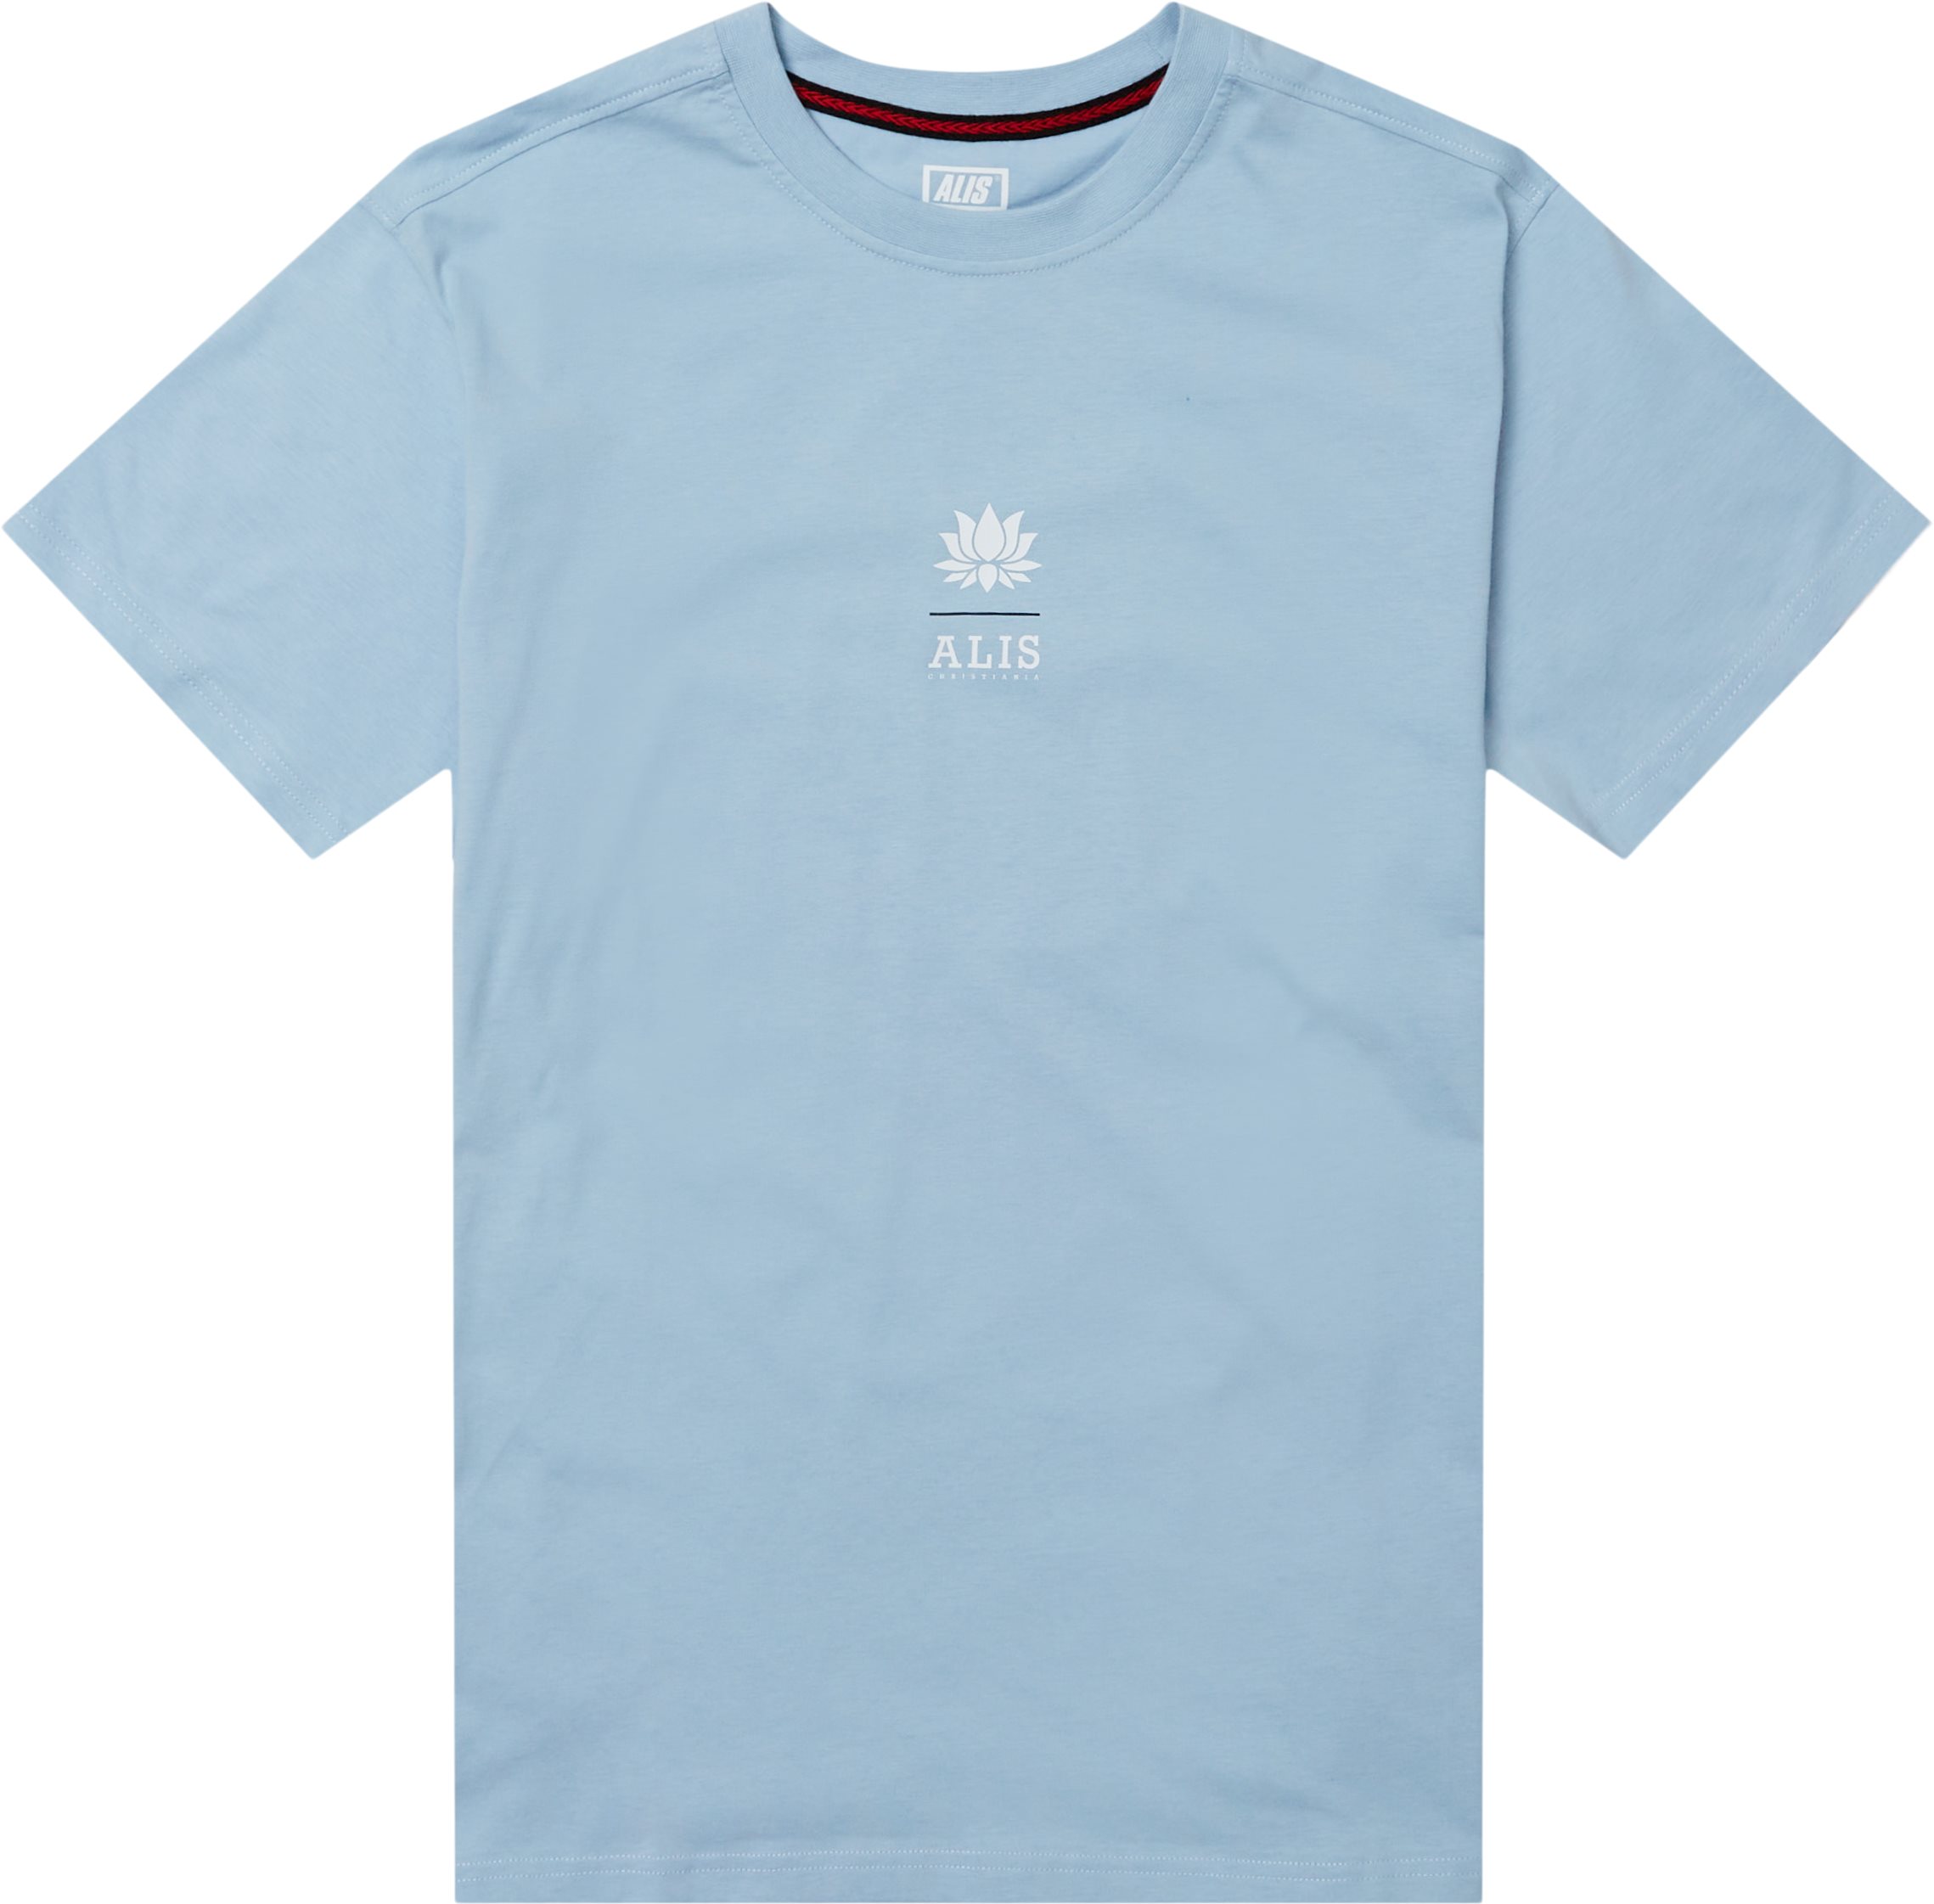 Miniature Lotus Tee - T-shirts - Regular fit - Blå